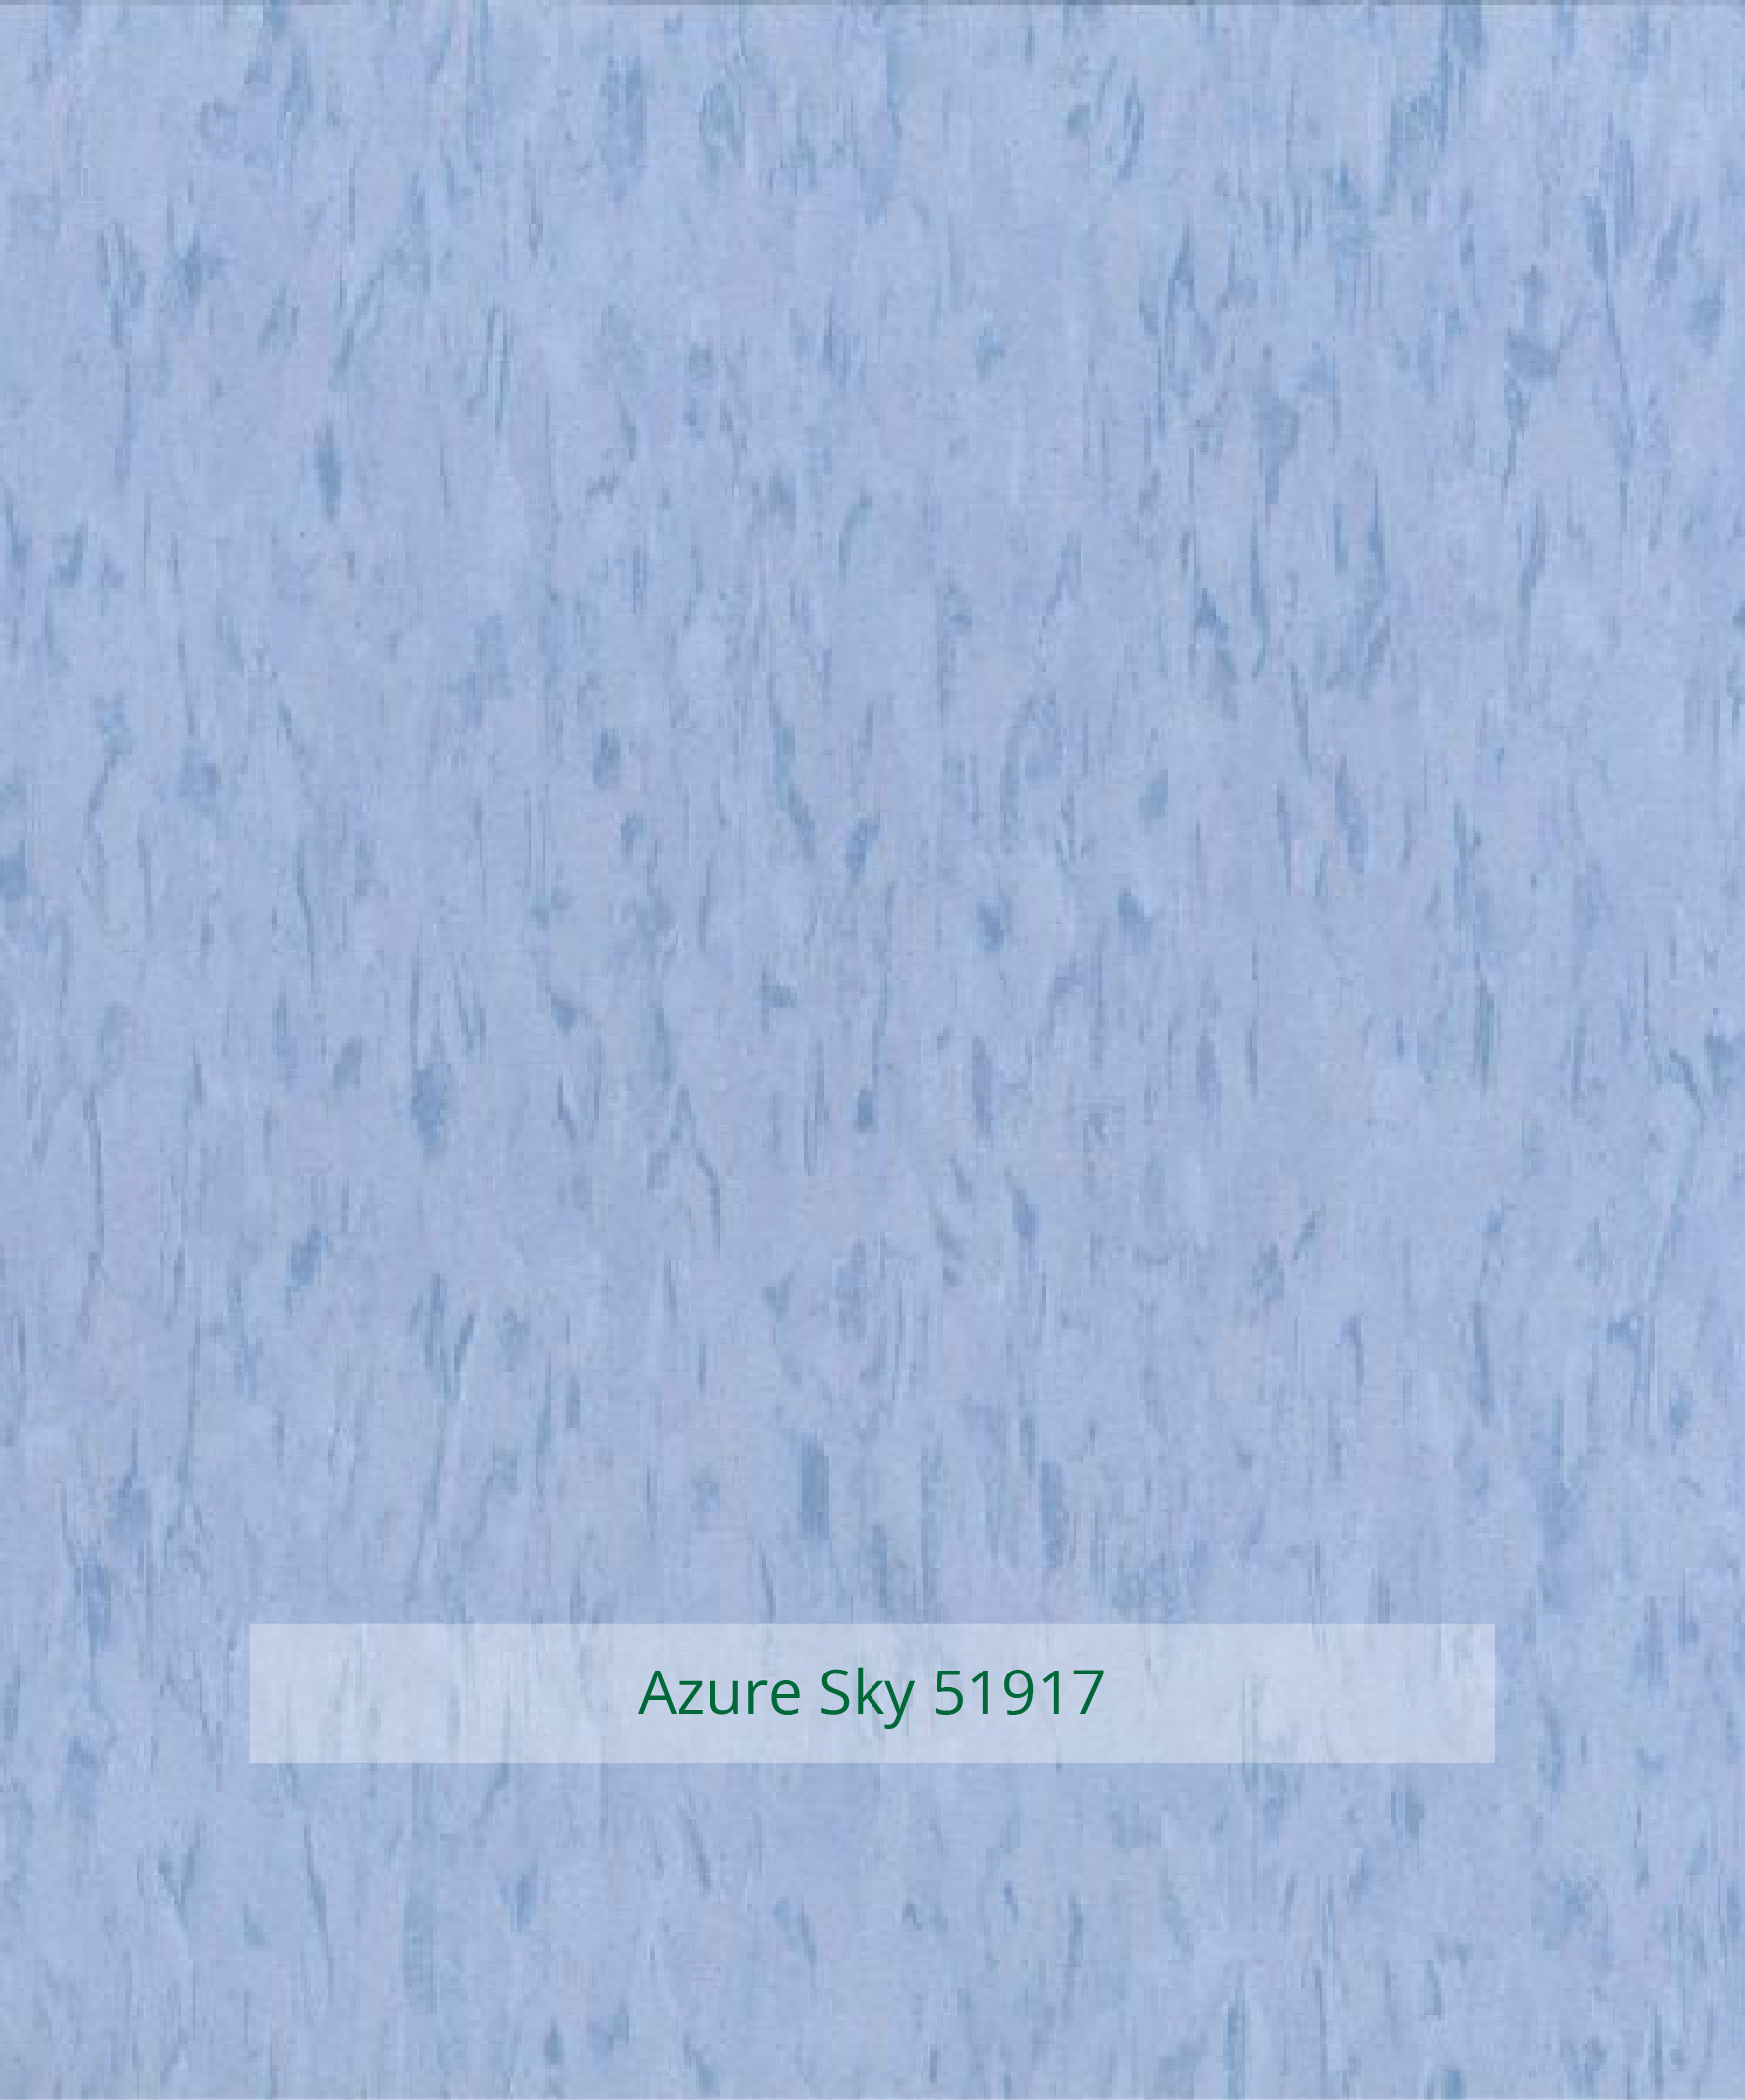 Standard EXCELON Imperial Series Azure Sky 51917a